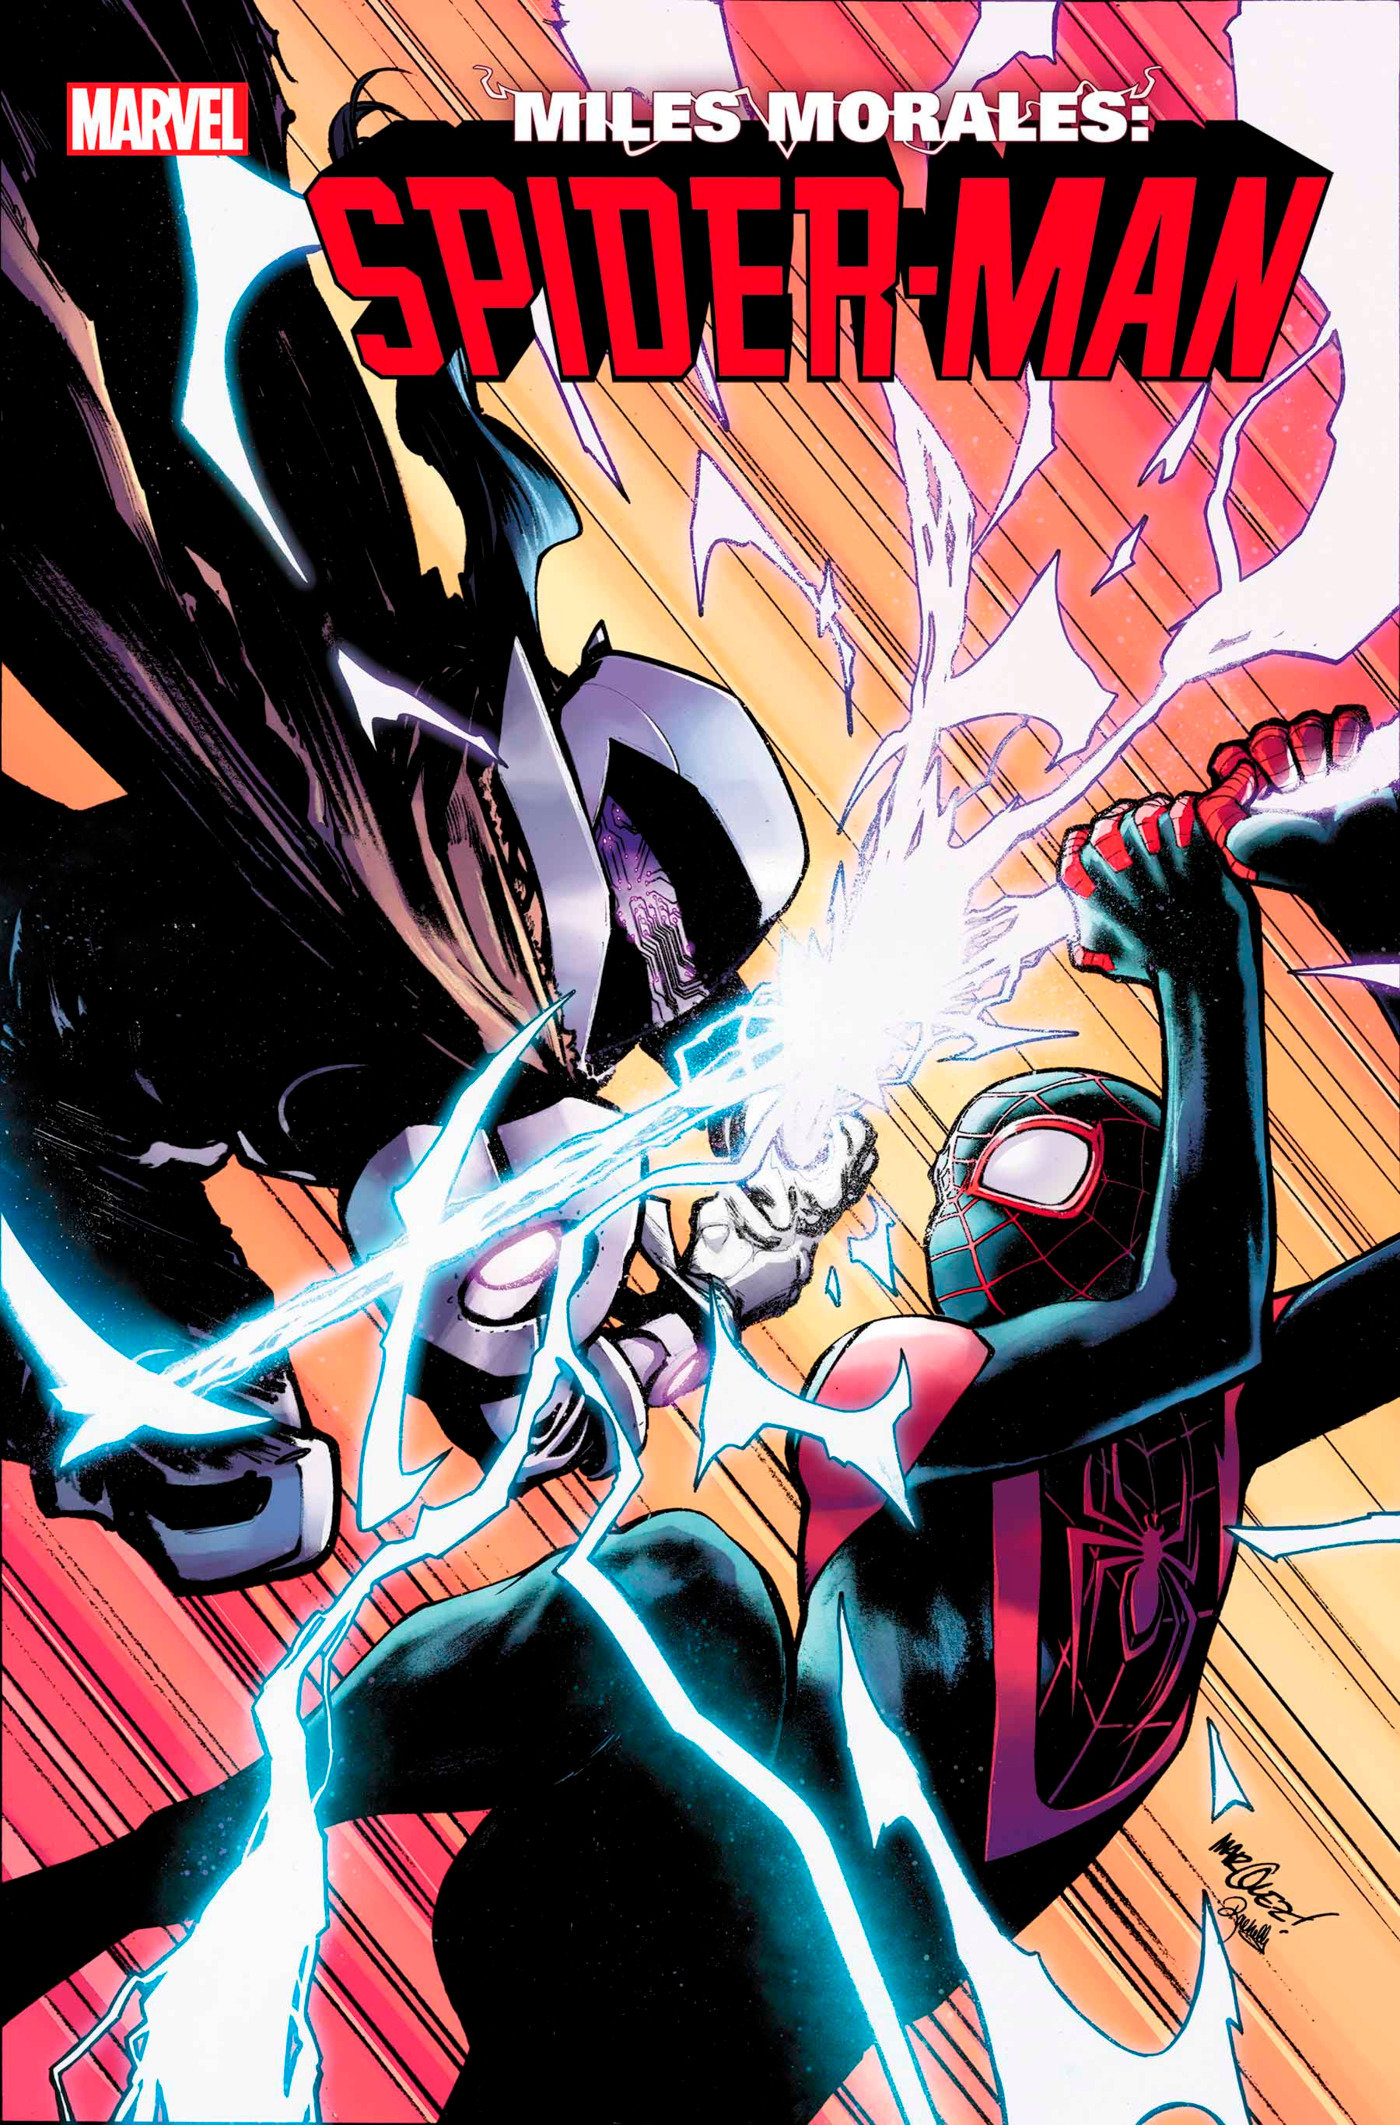 Miles Morales: Spider-Man #18 David Marquez Variant